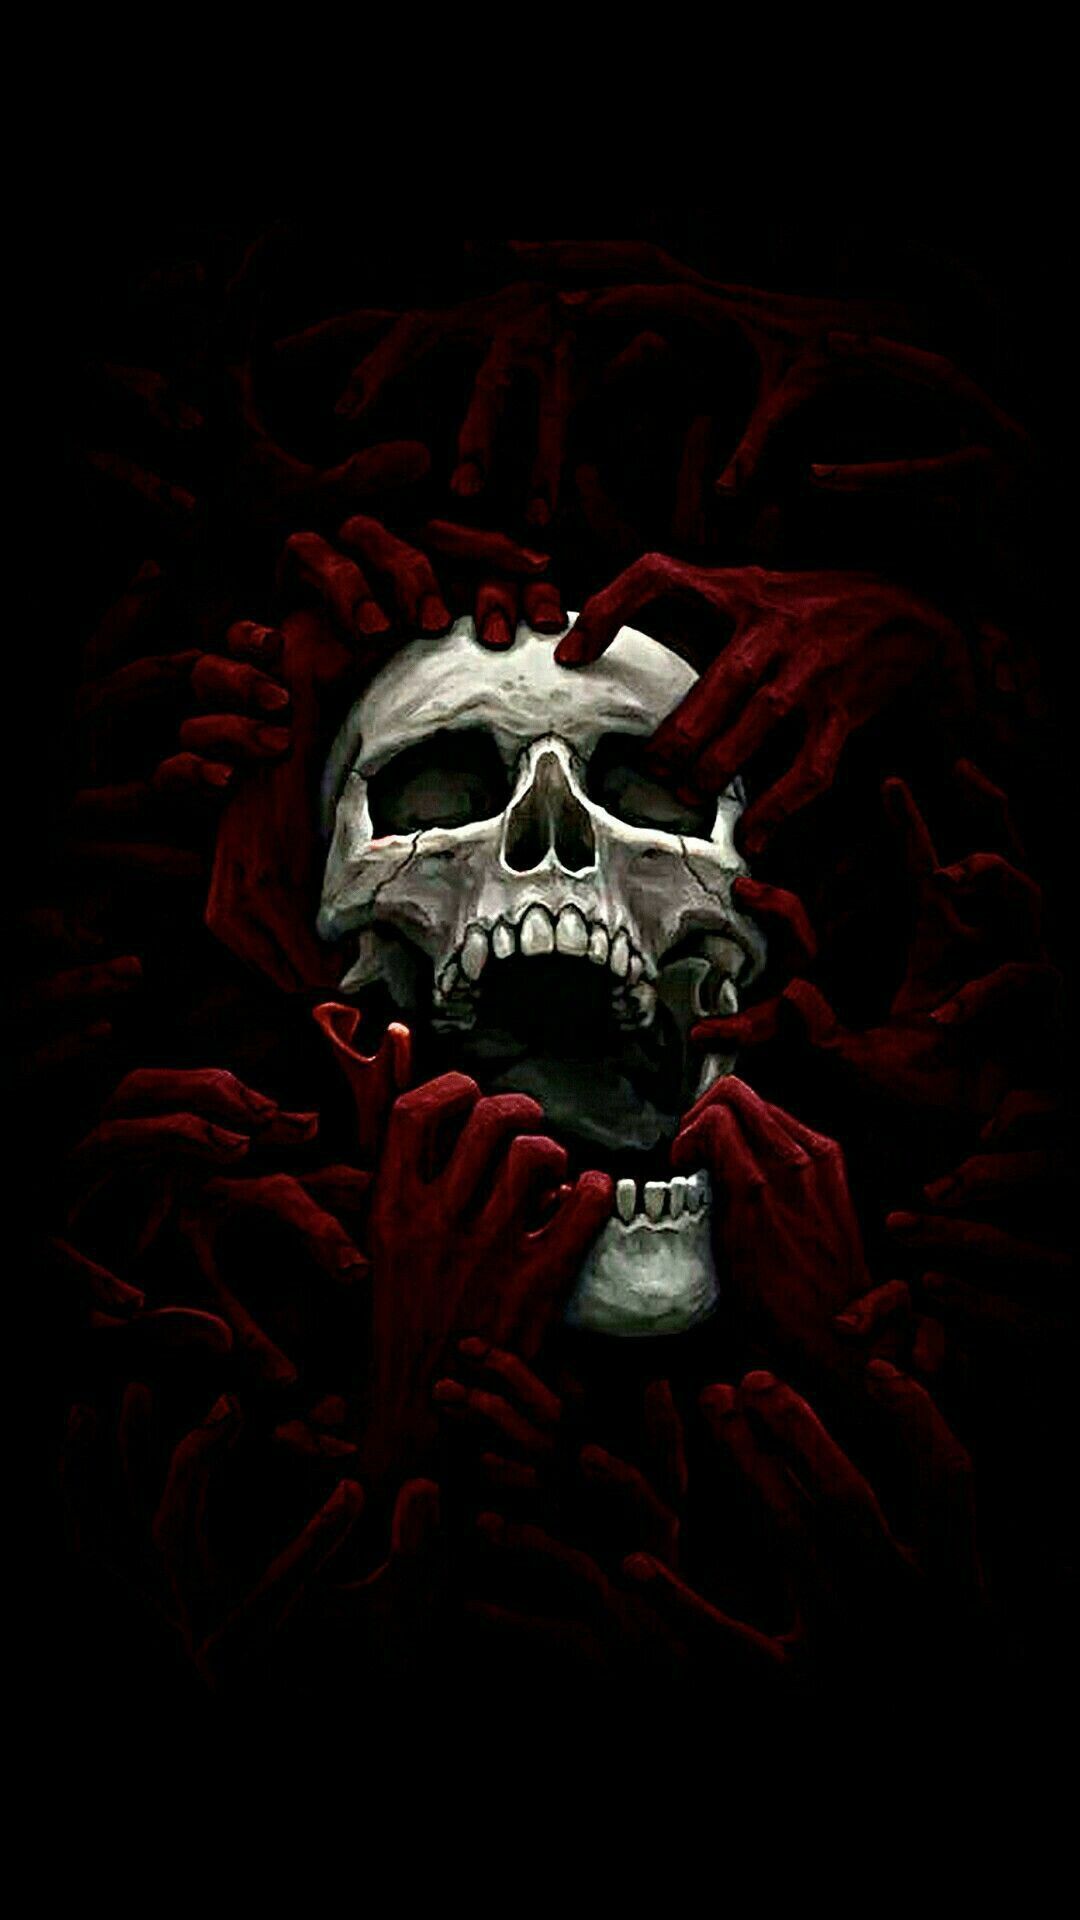 Black Skull iPhone Wallpaper Free Black Skull iPhone Background